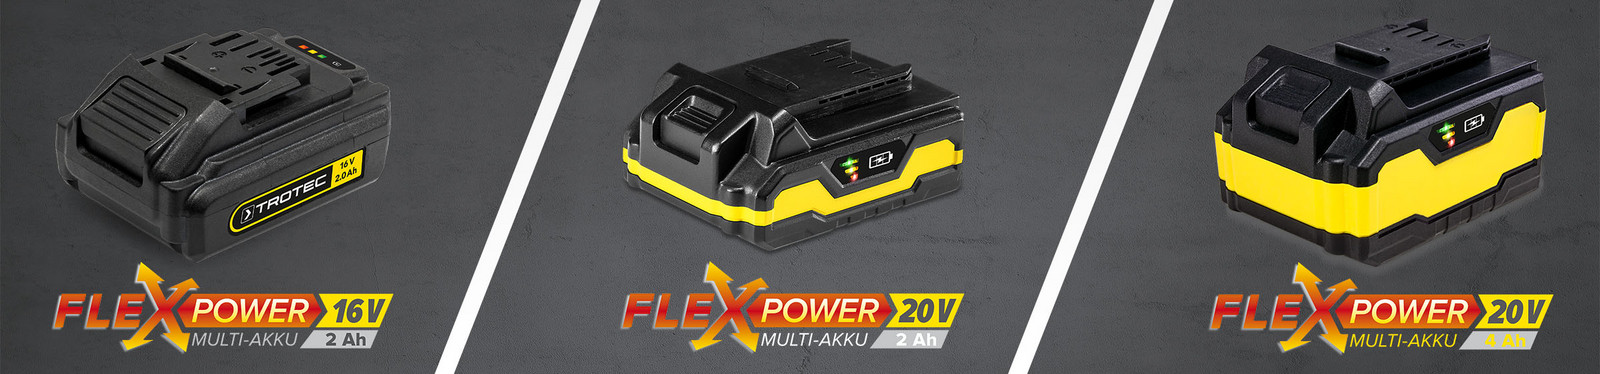 Flexpower – det innovative multibatterisystemet fra Trotec